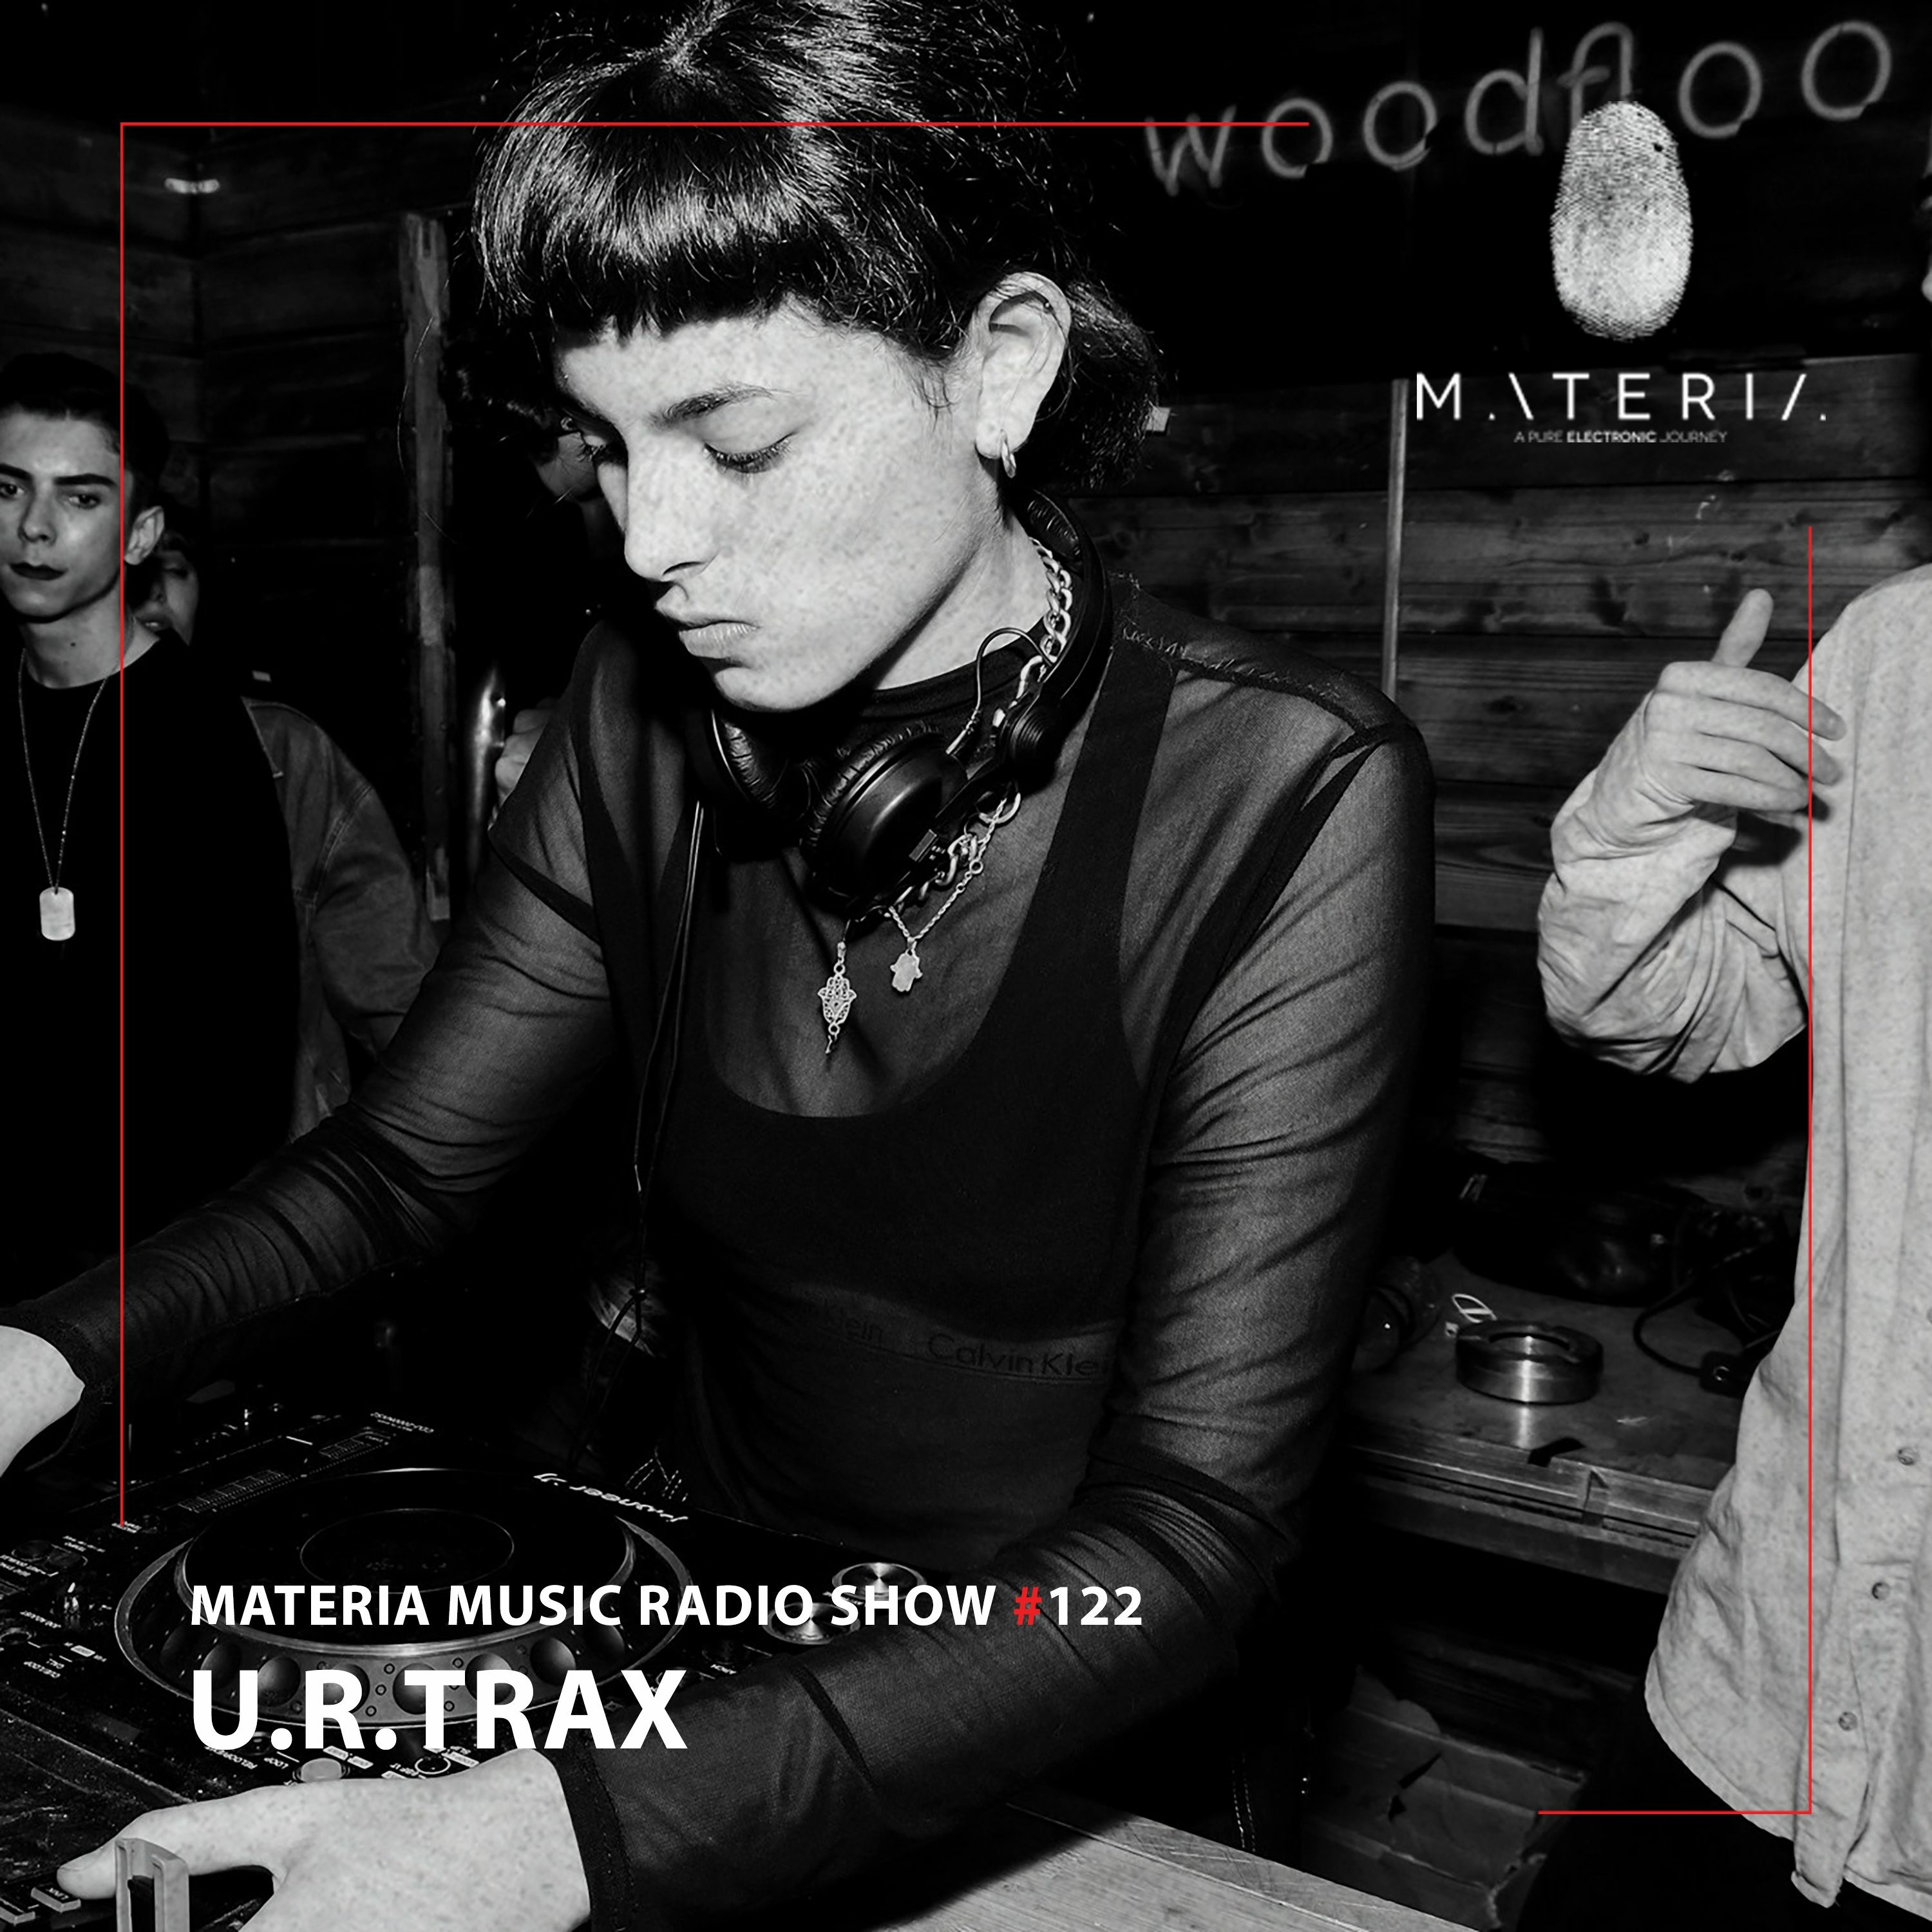 MATERIA Music Radio Show 122 with u.r.trax